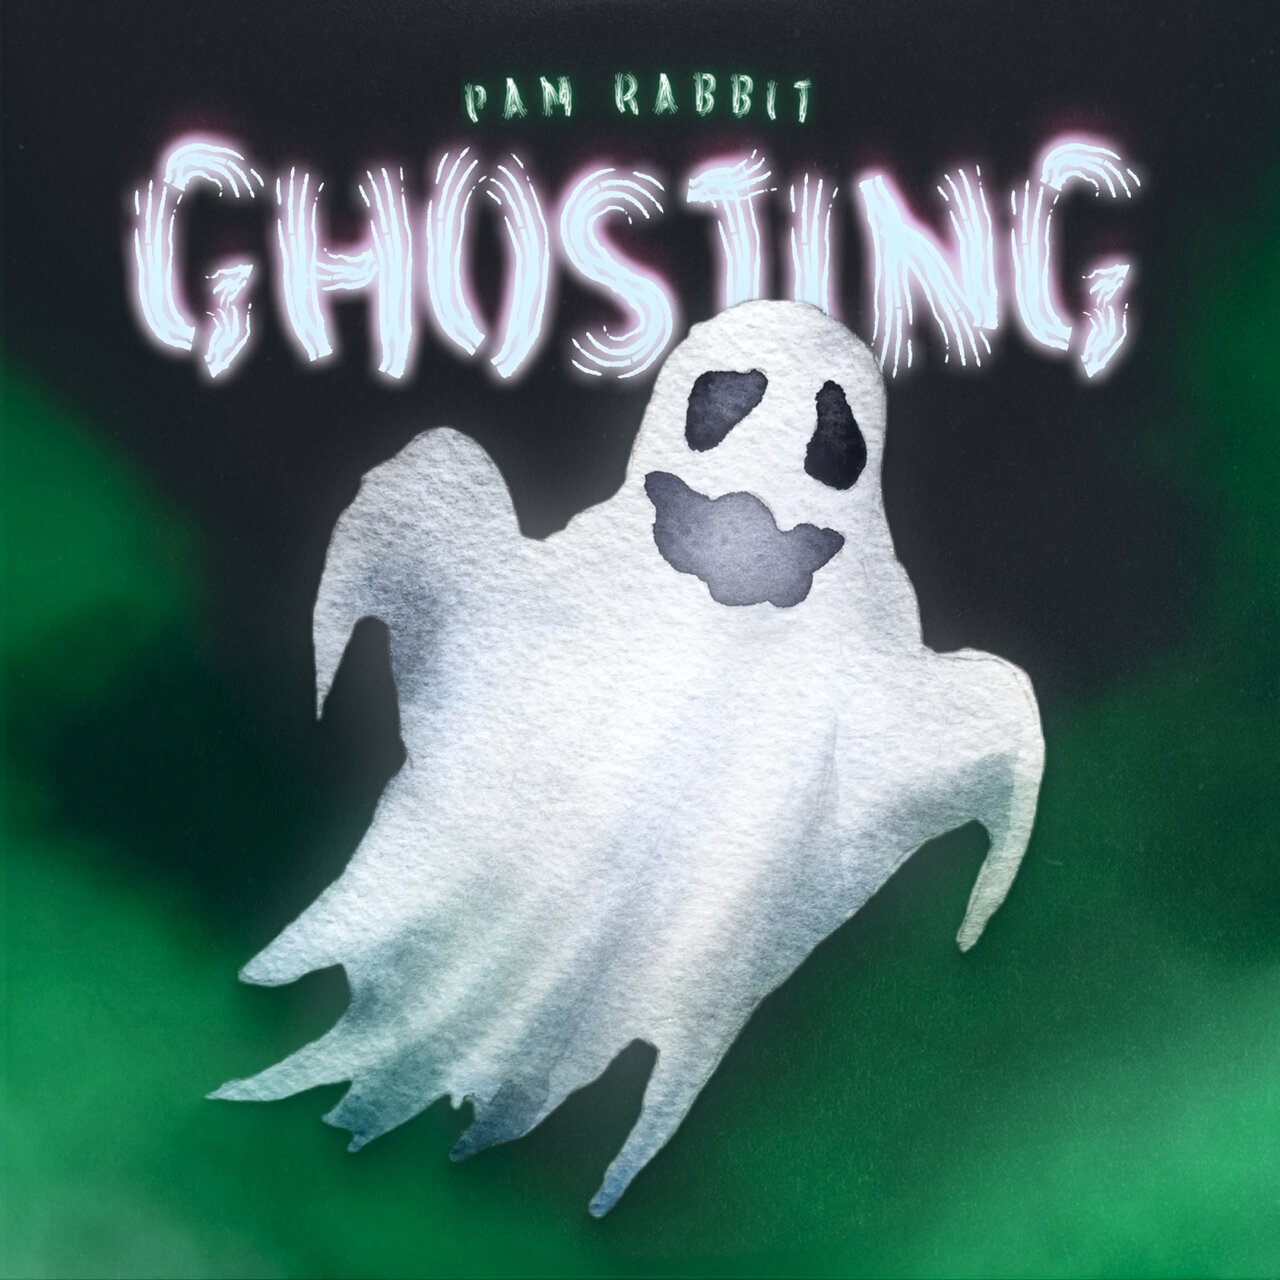 Pam Rabbit ghosting cover artwork